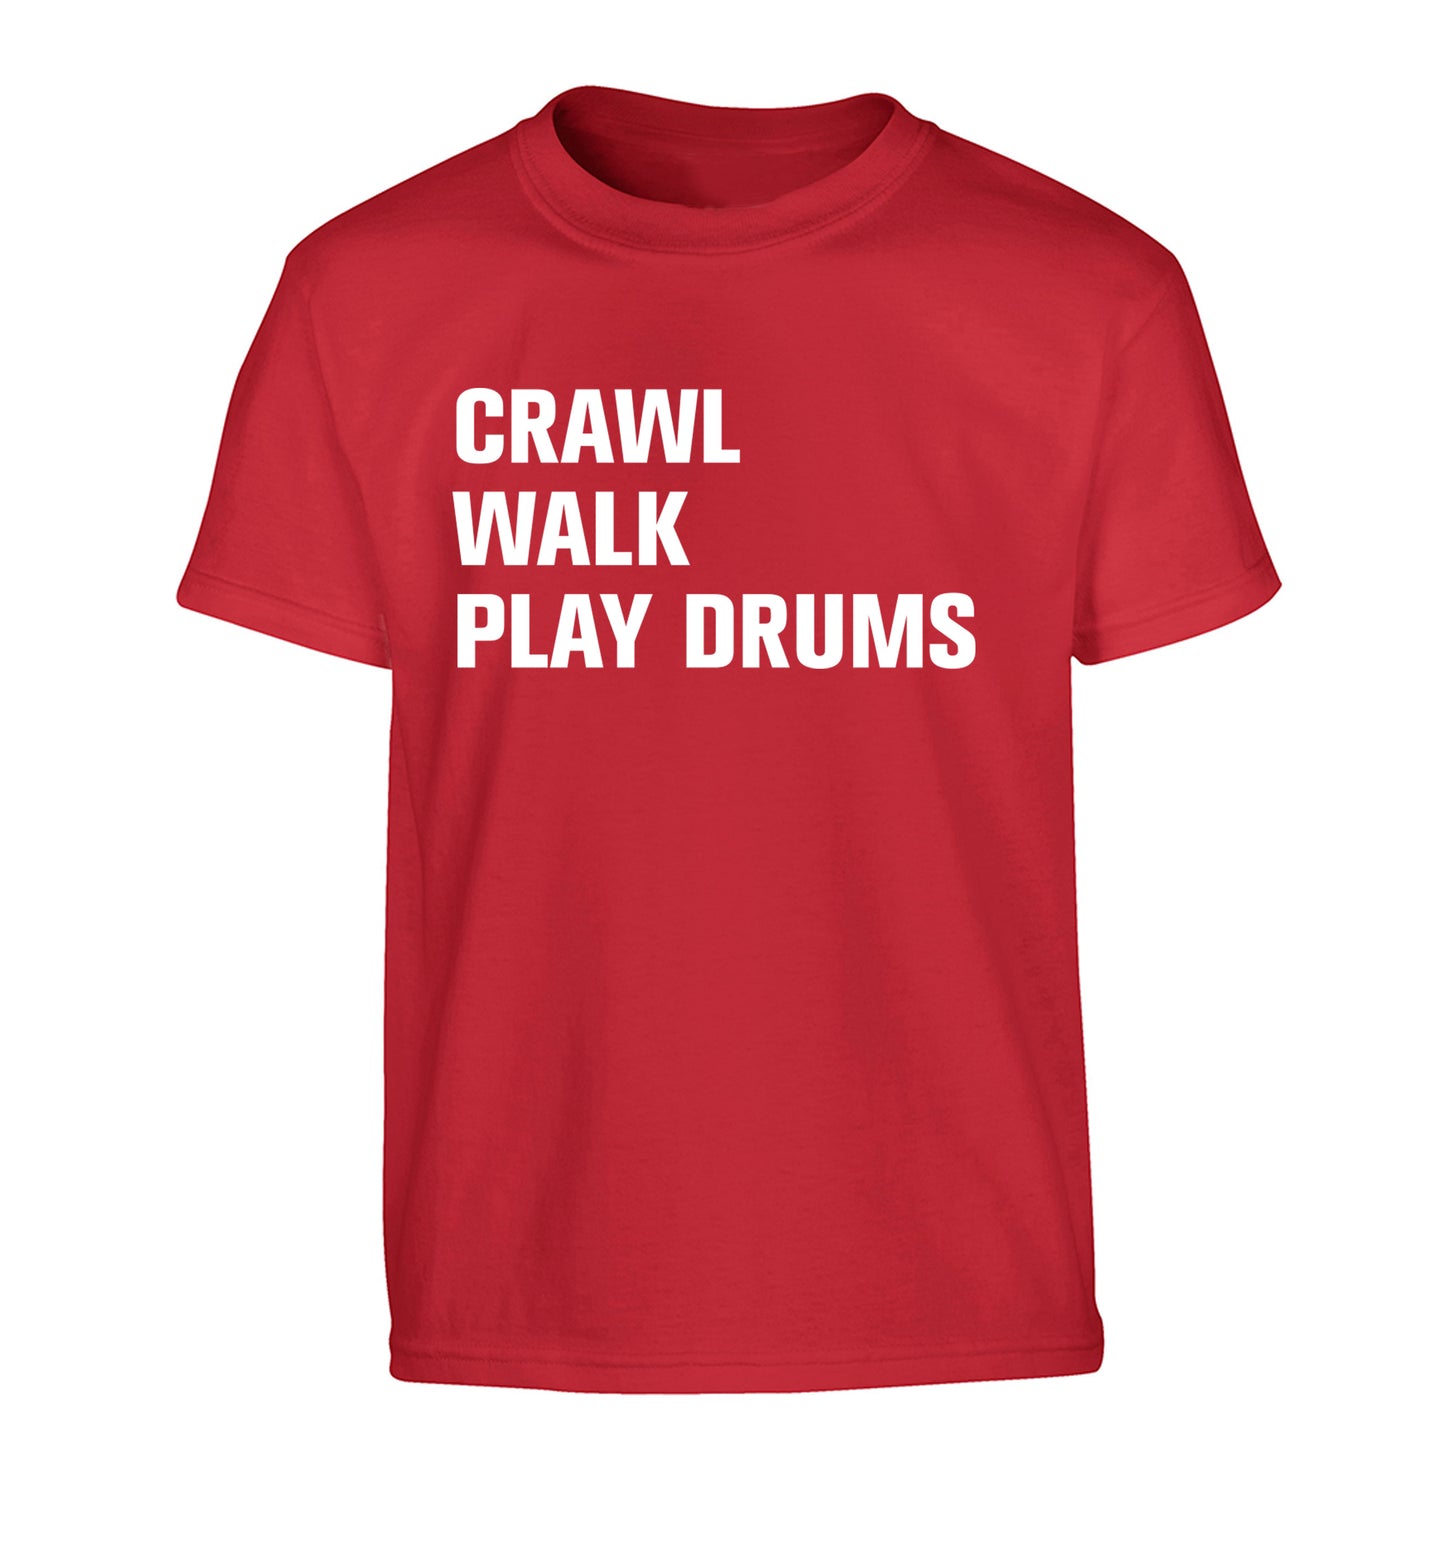 Crawl walk play drums Children's red Tshirt 12-13 Years